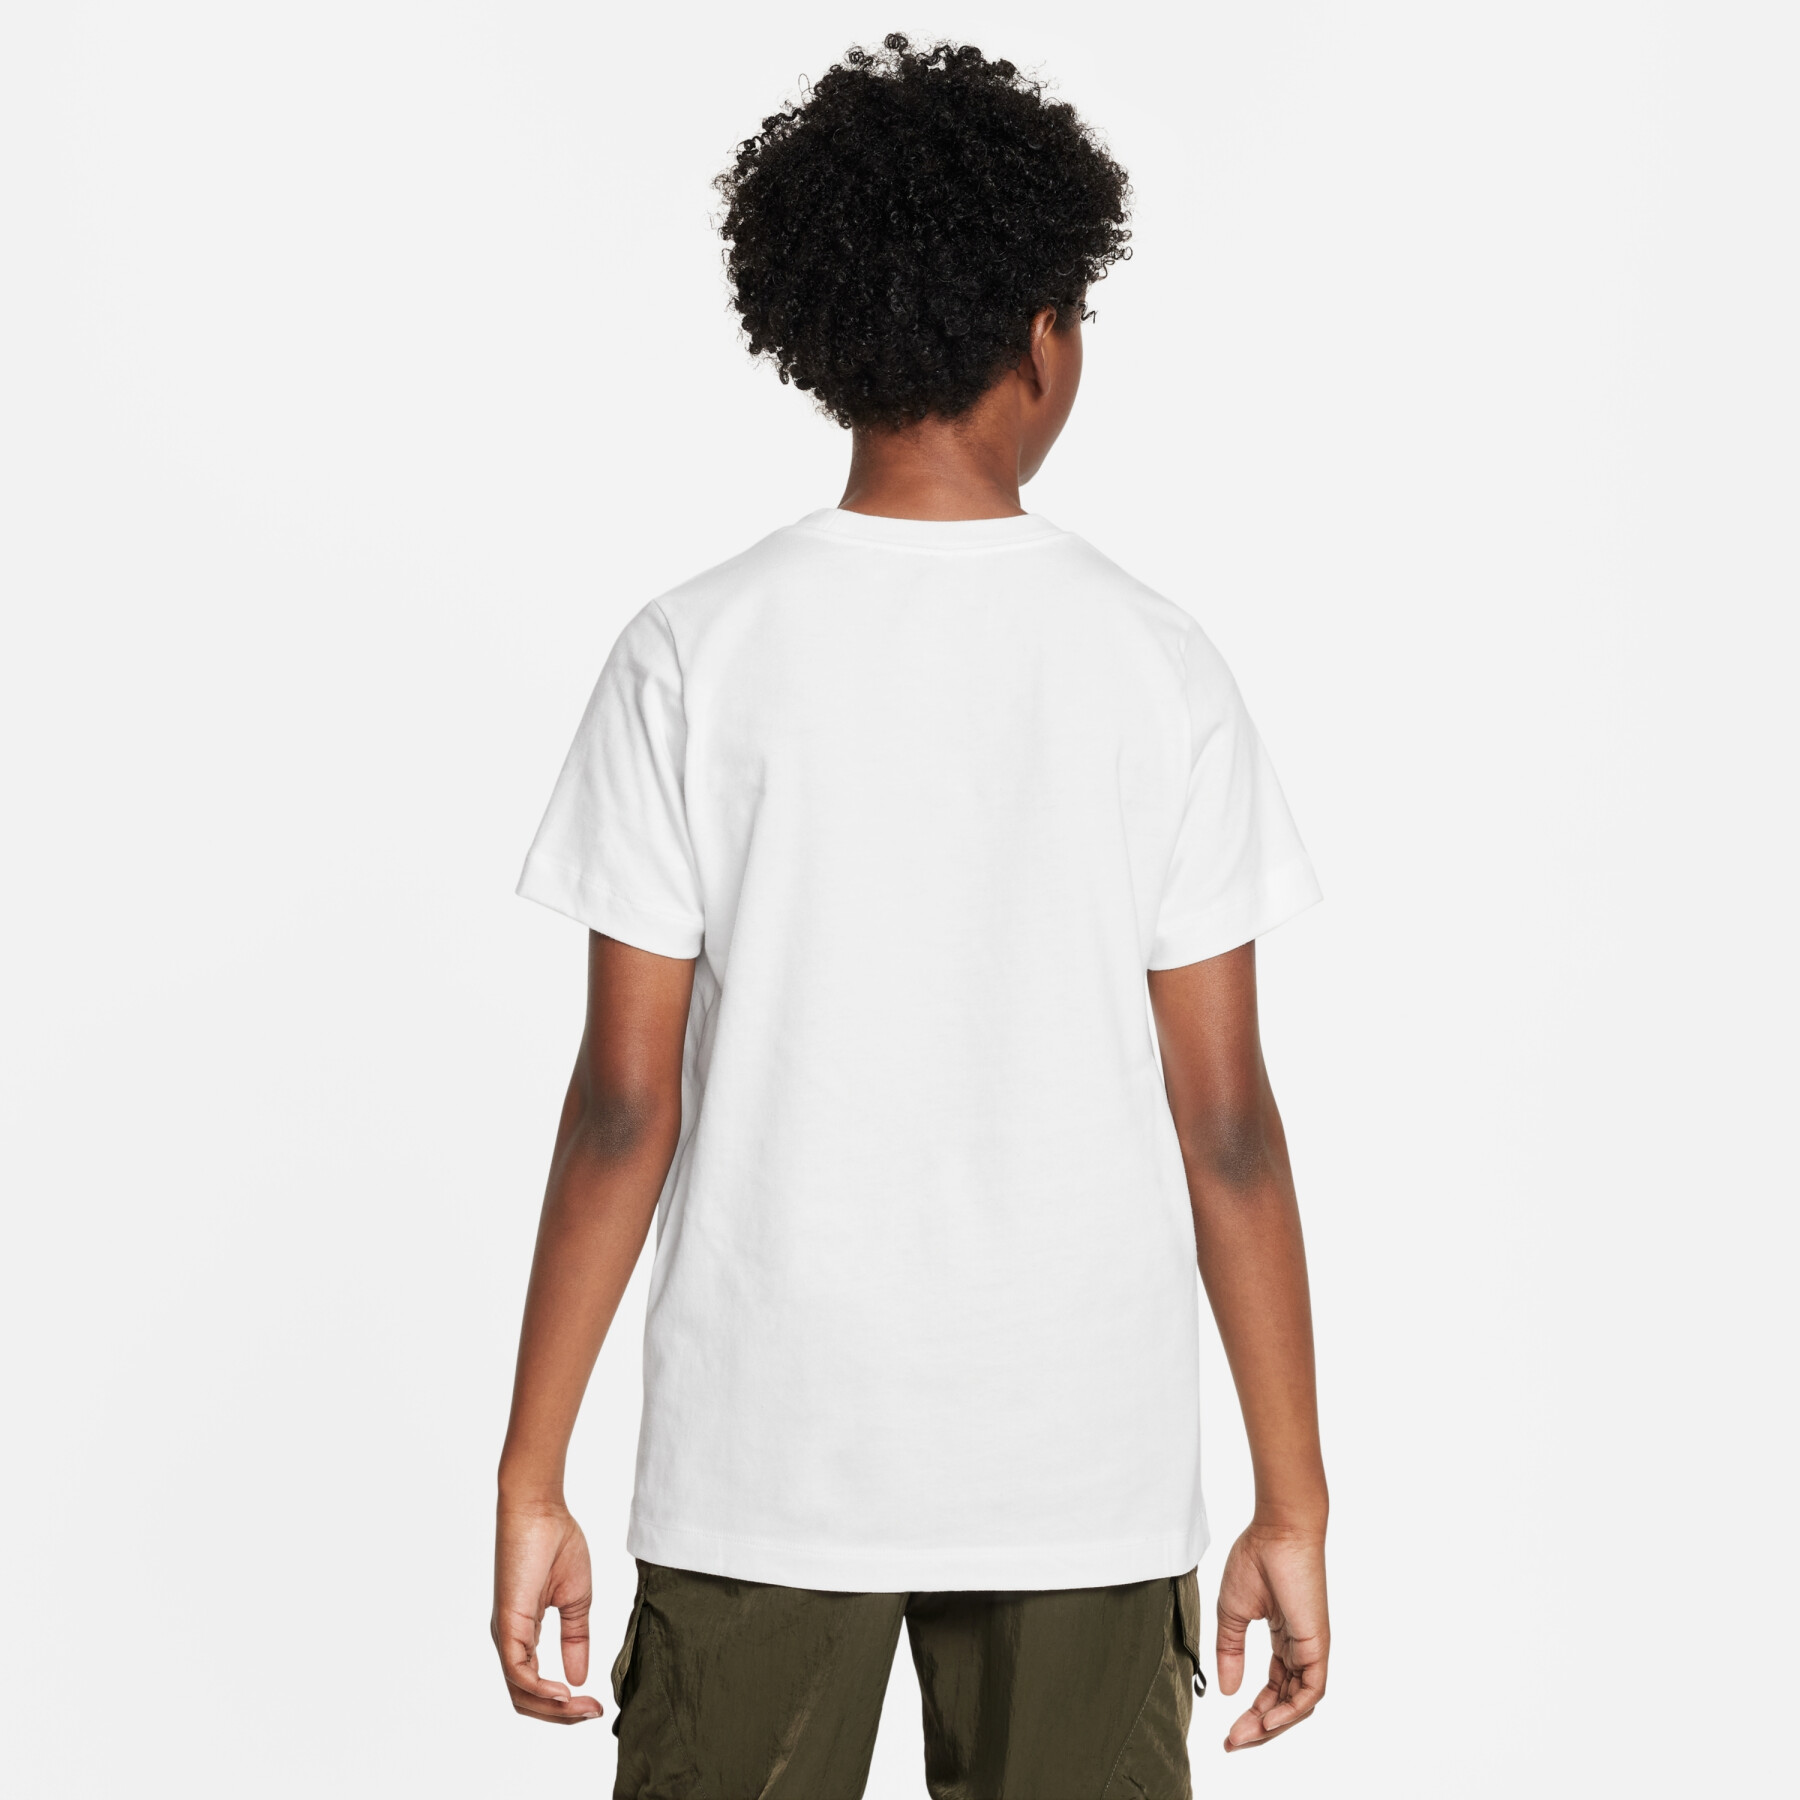 Kinder-T-shirt Nike